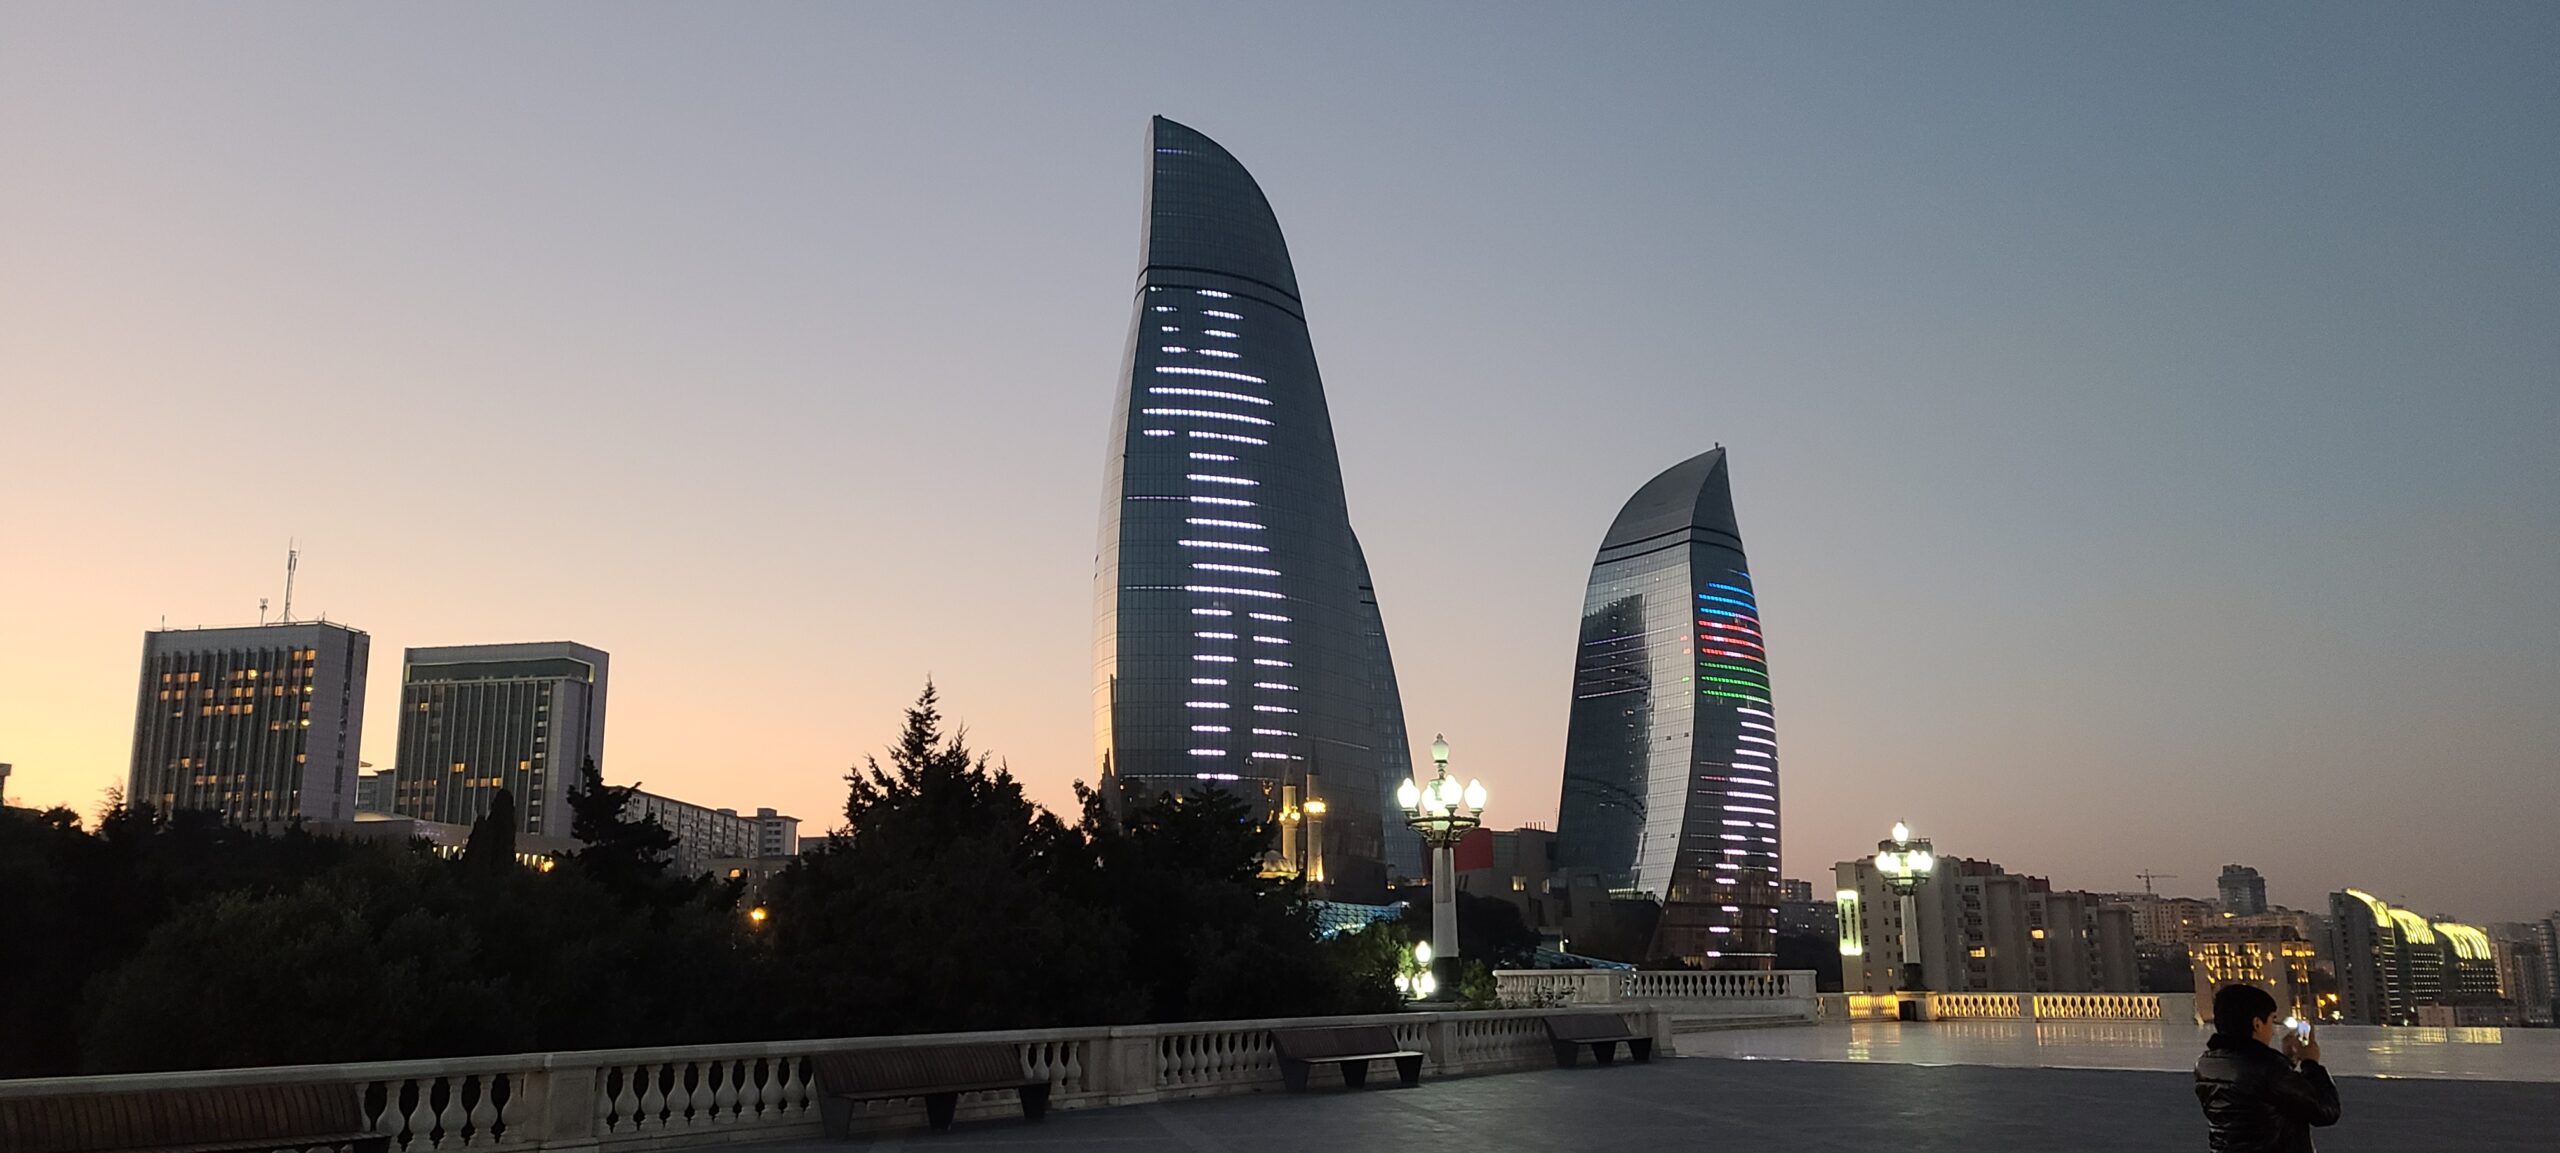 Azerbaijan Flame Towers Evening